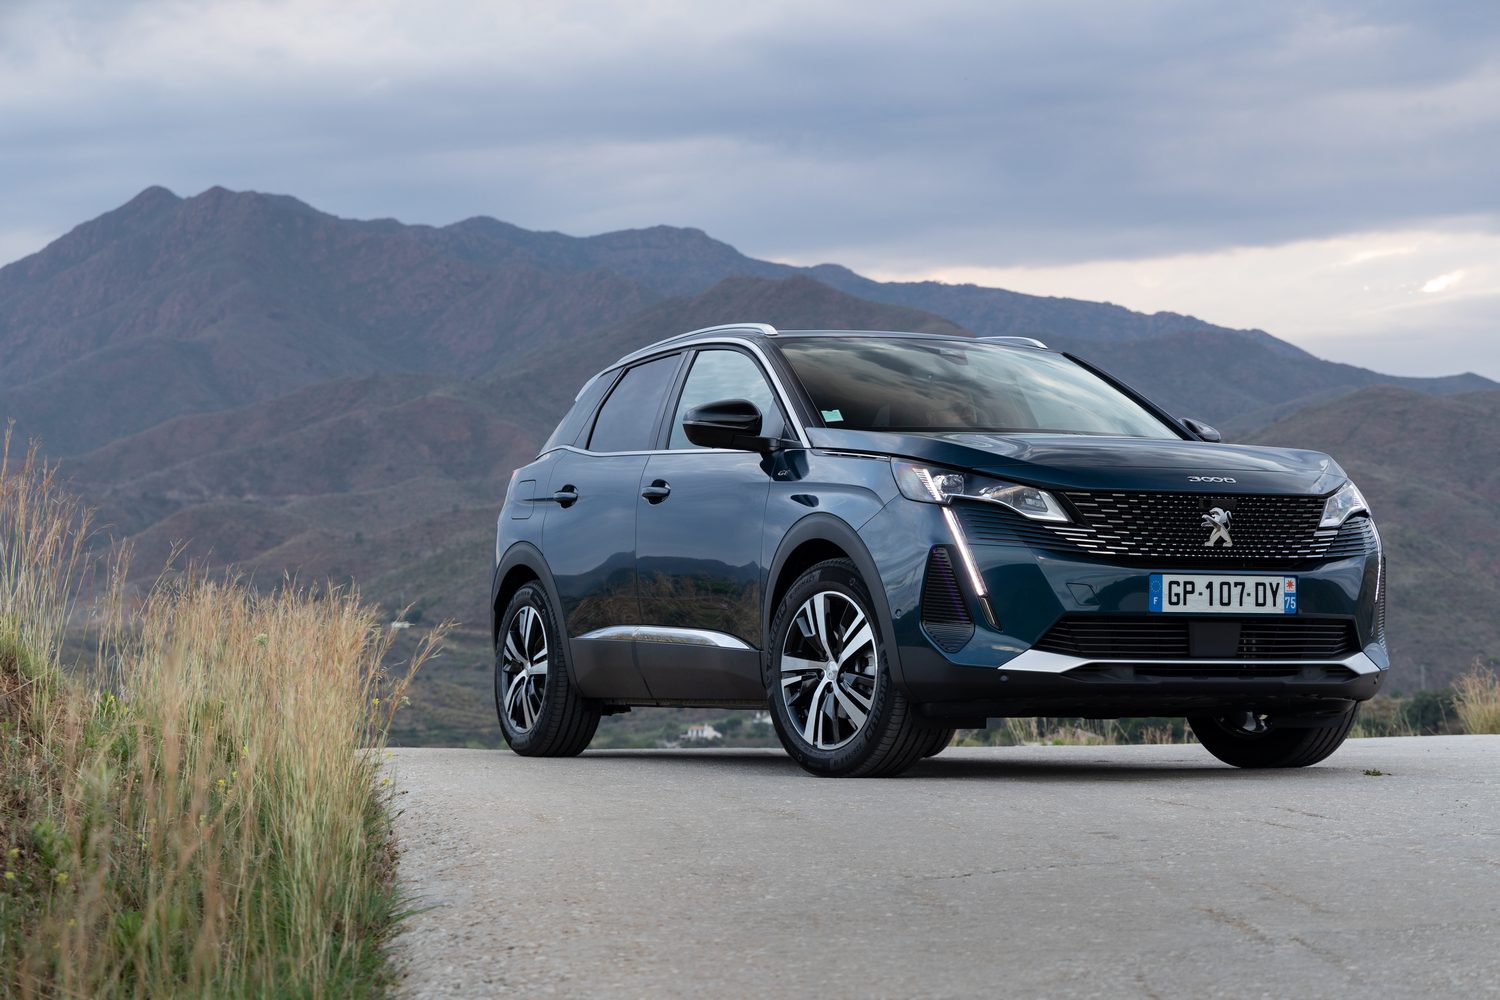 Car Reviews | Peugeot 3008 | CompleteCar.ie